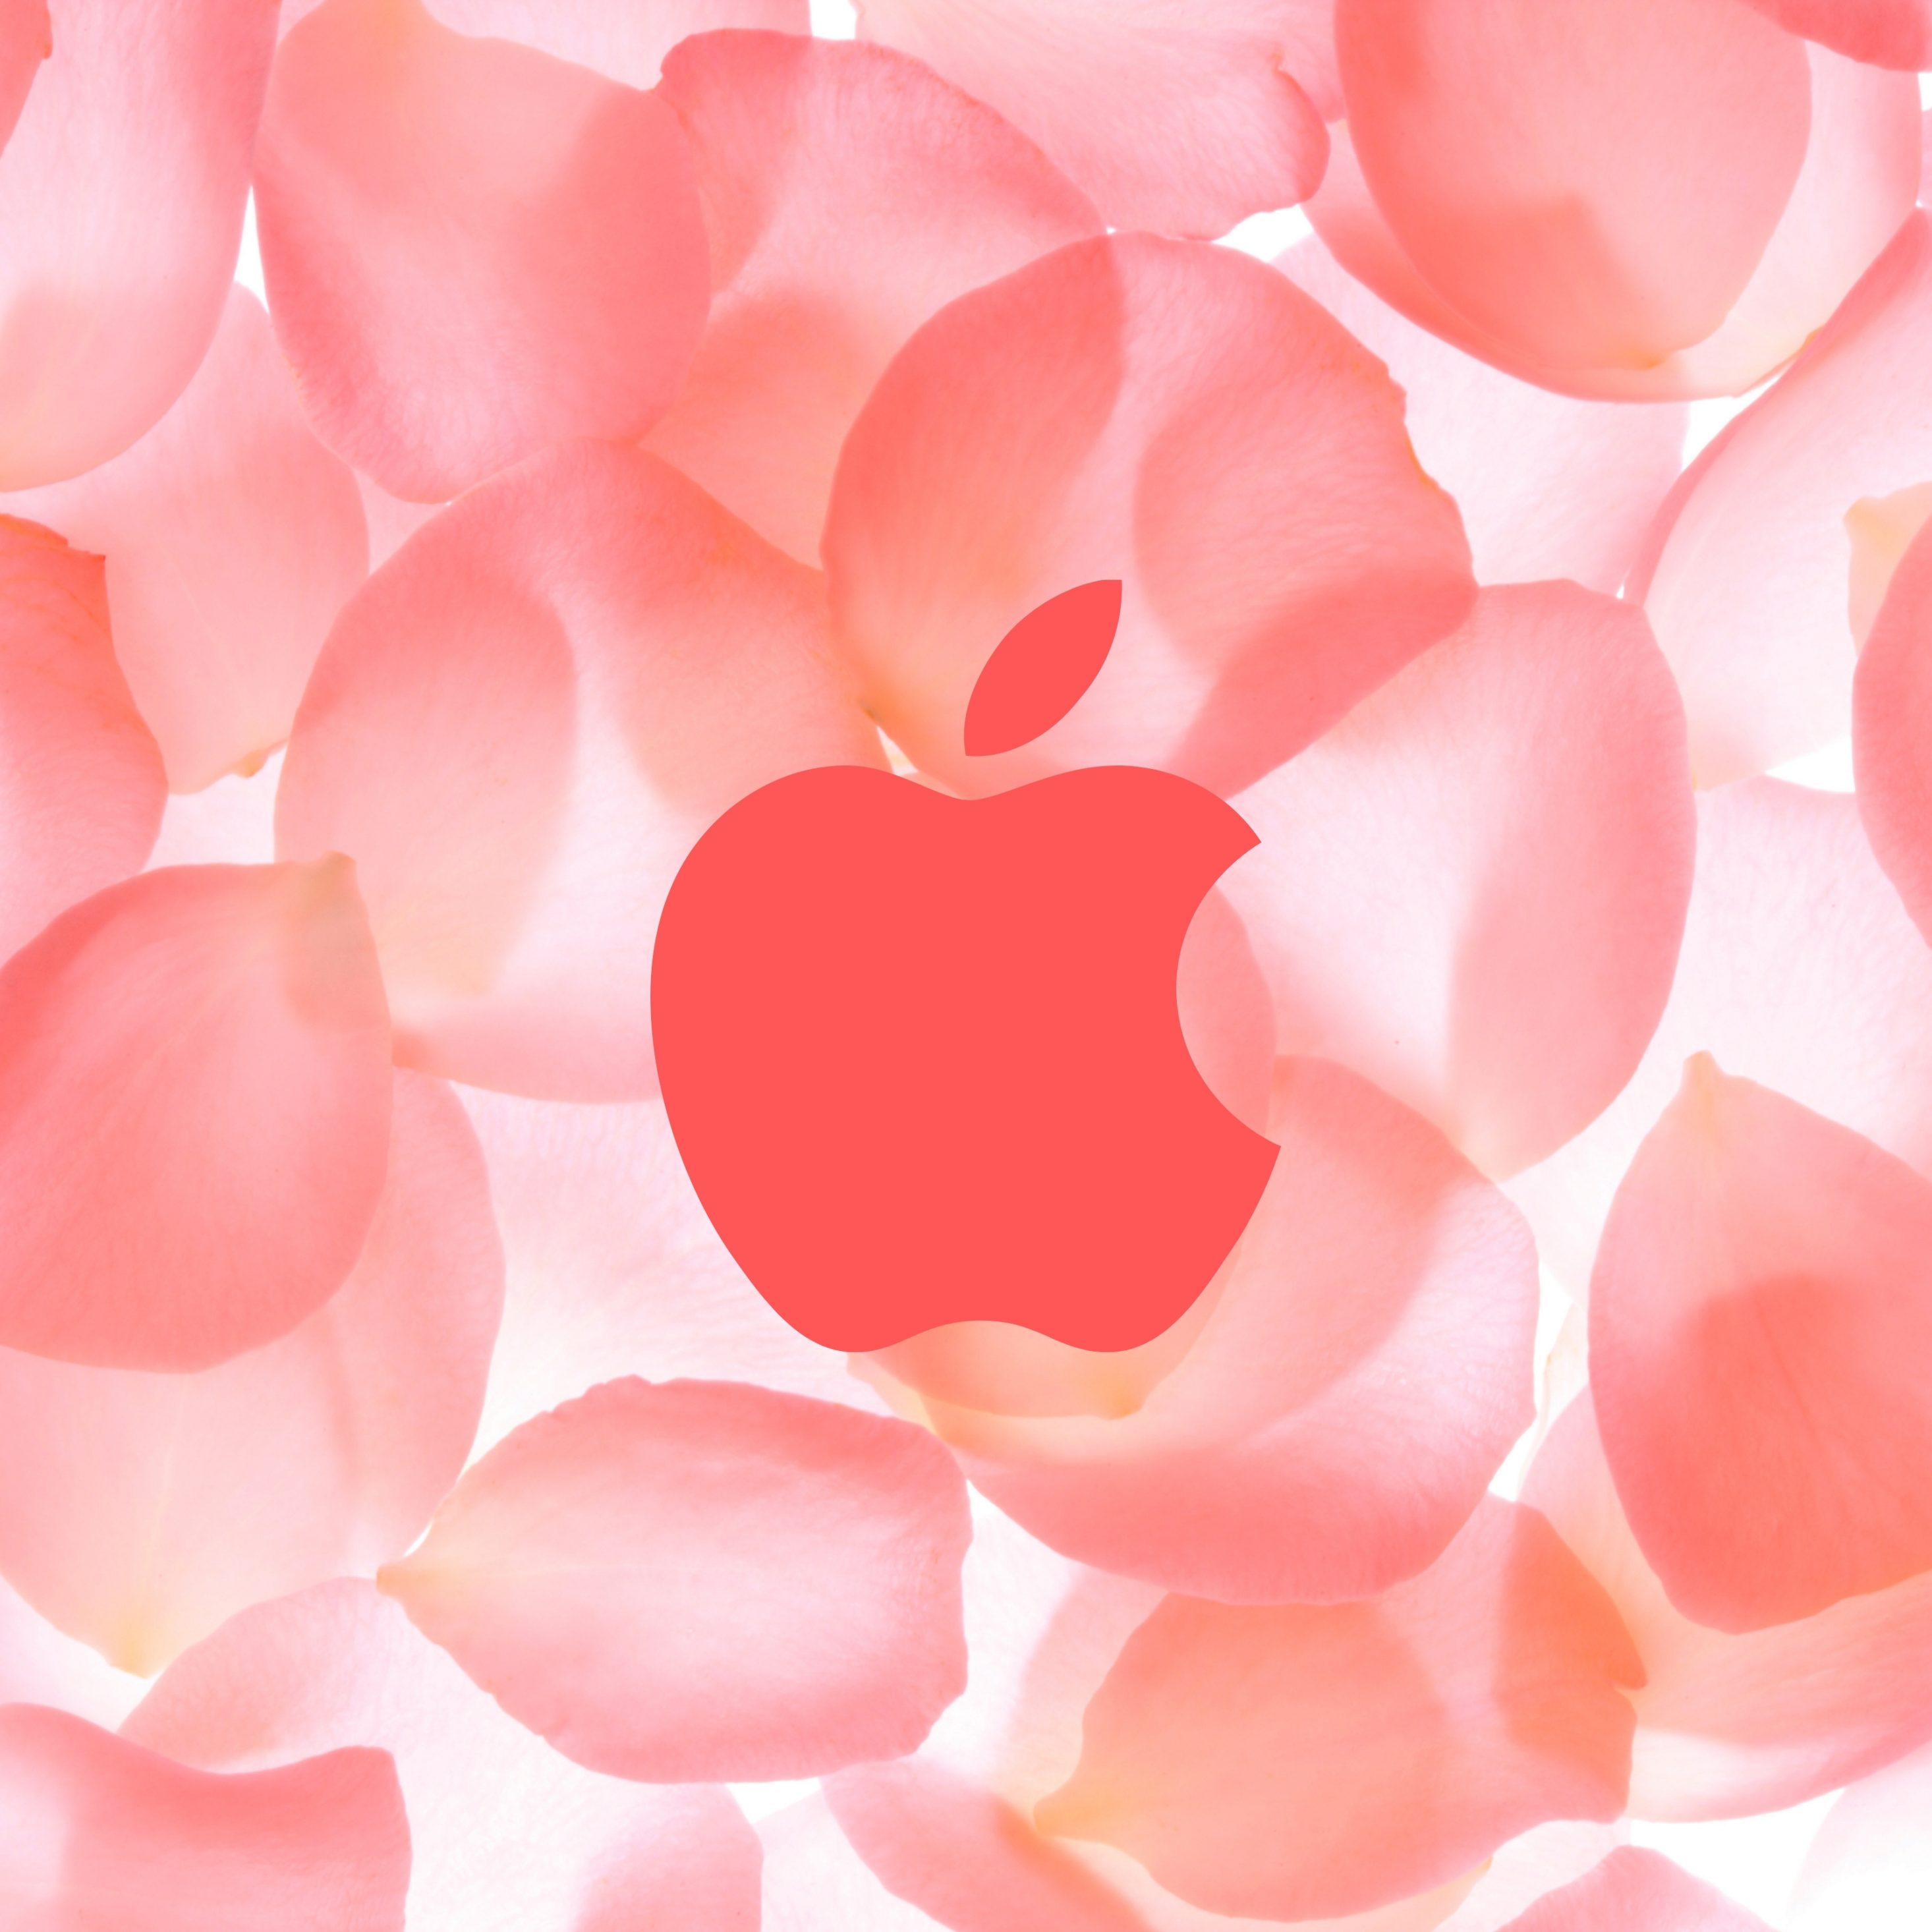 2932x2932 iPad Pro wallpaper 4k Apple Logo Iphone Macos Beautiful Flower Background iPad Wallpaper 2932x2932 pixels resolution